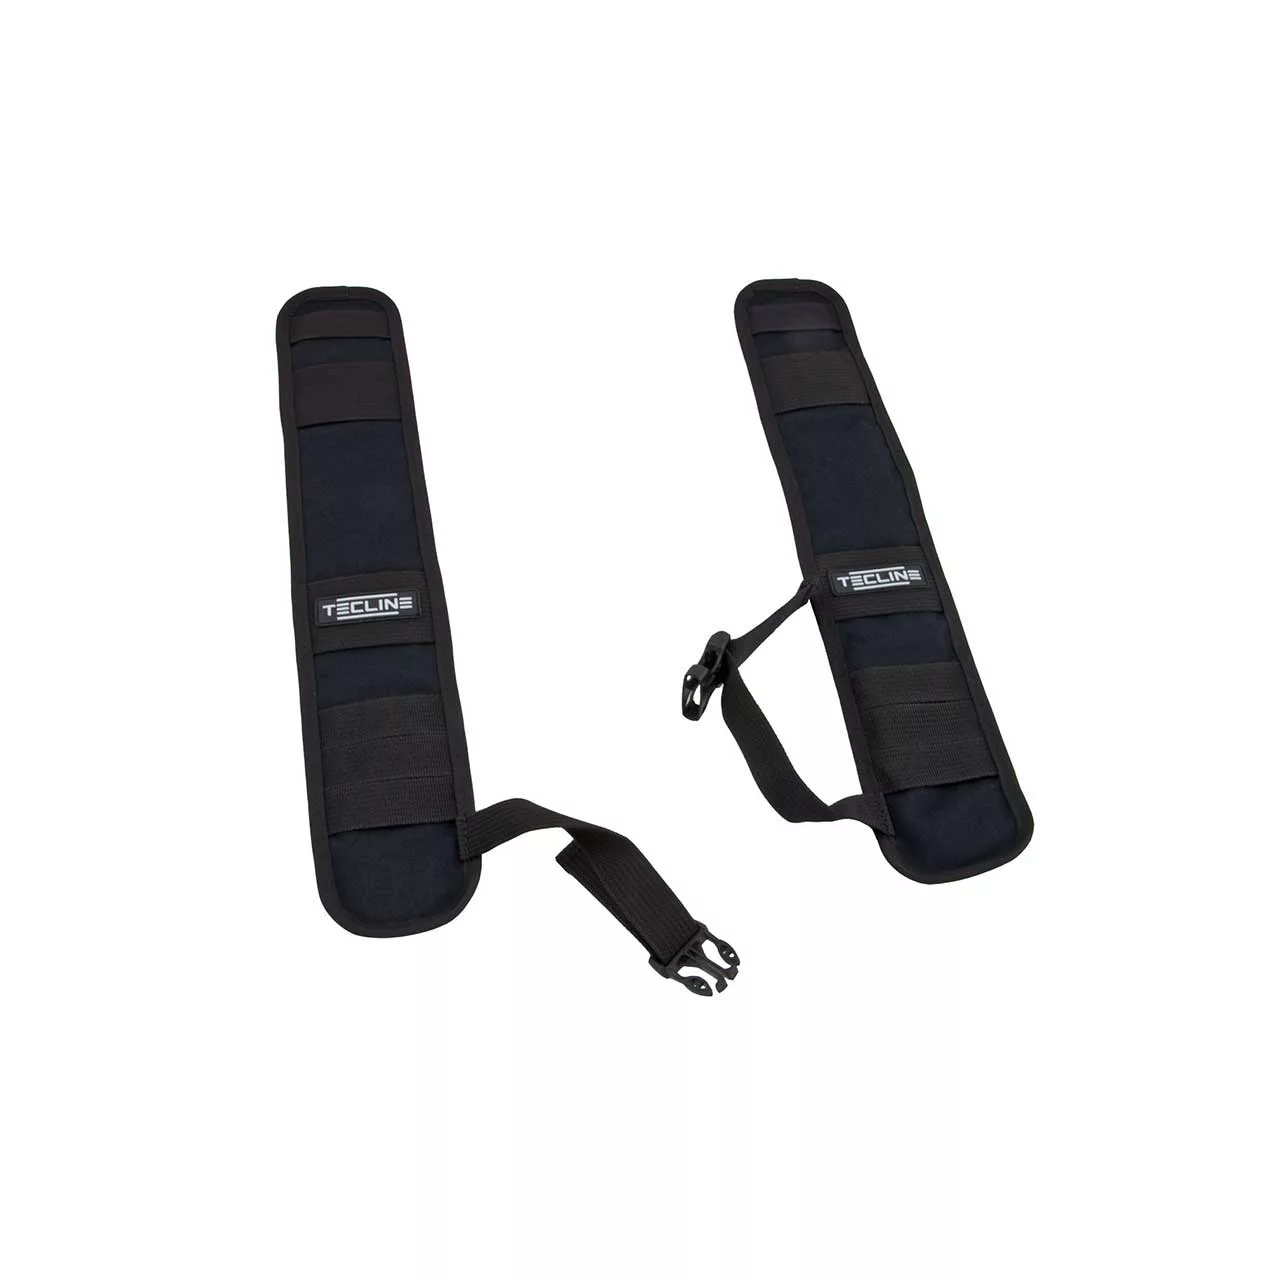 Tecline shoulders for harness comfort T01063